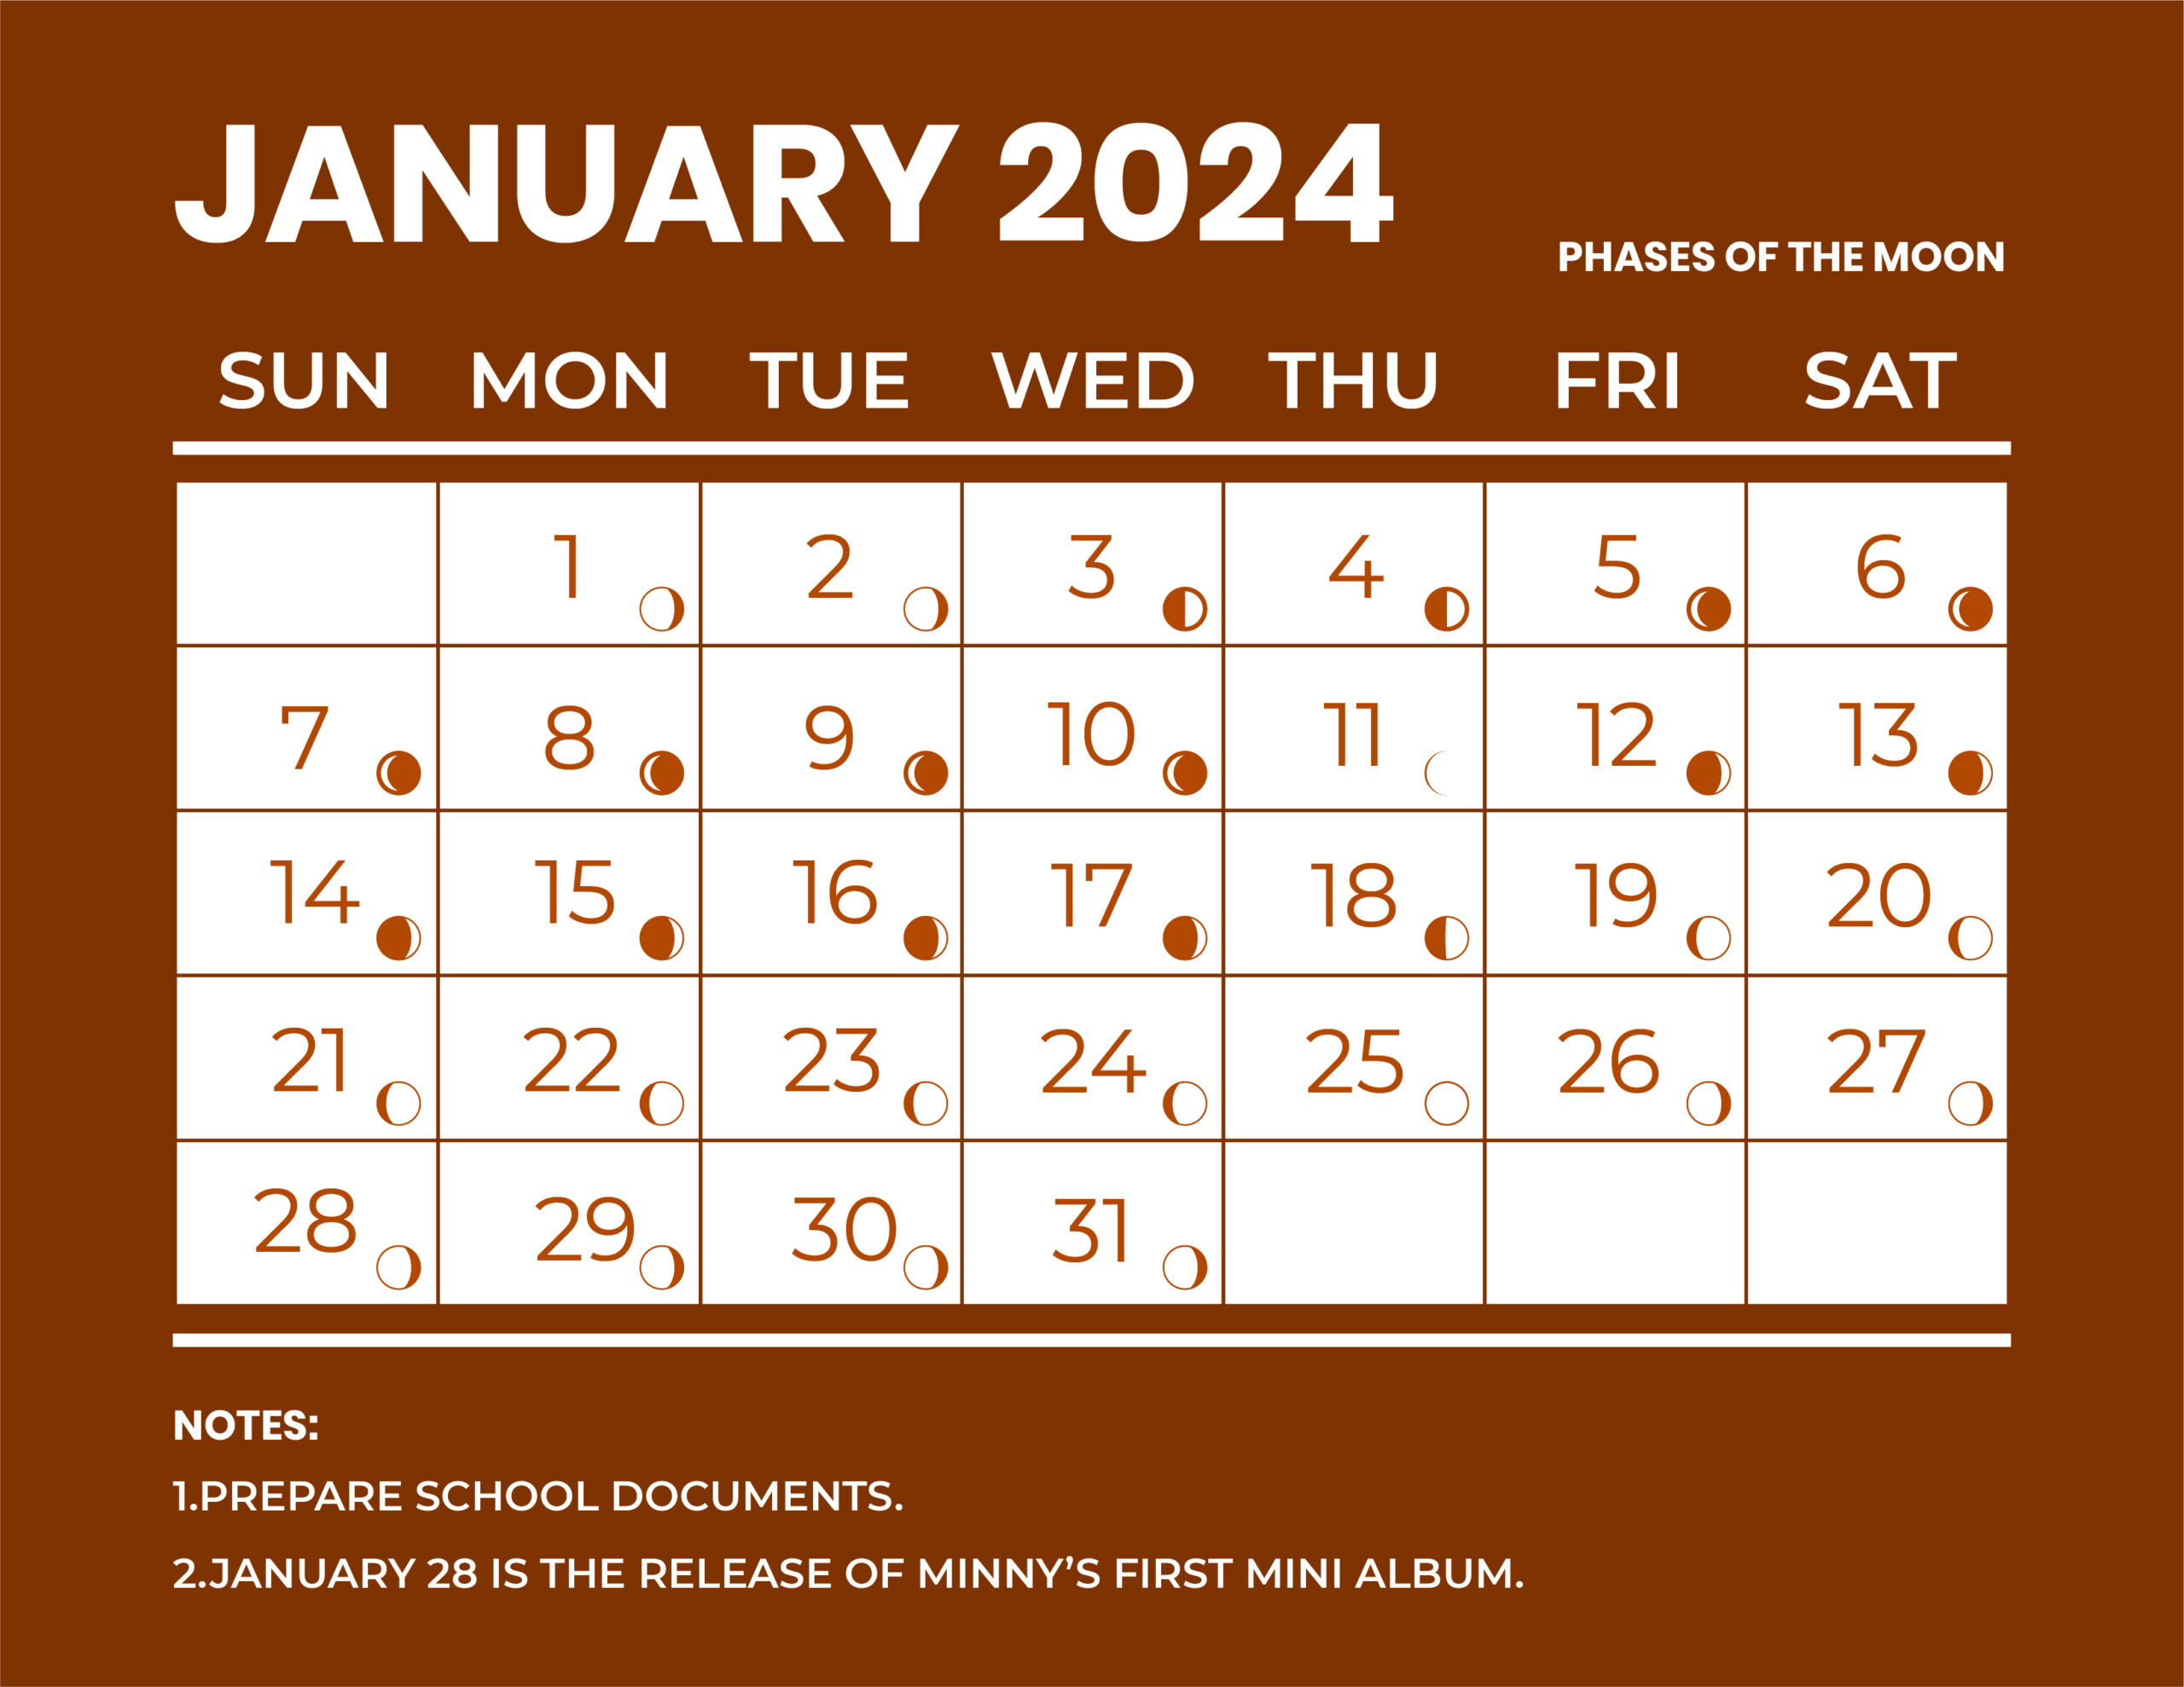 January 2024 Calendar With Moon Phases - Word, Illustrator, Eps for Free Printable Lunar Calendar 2024